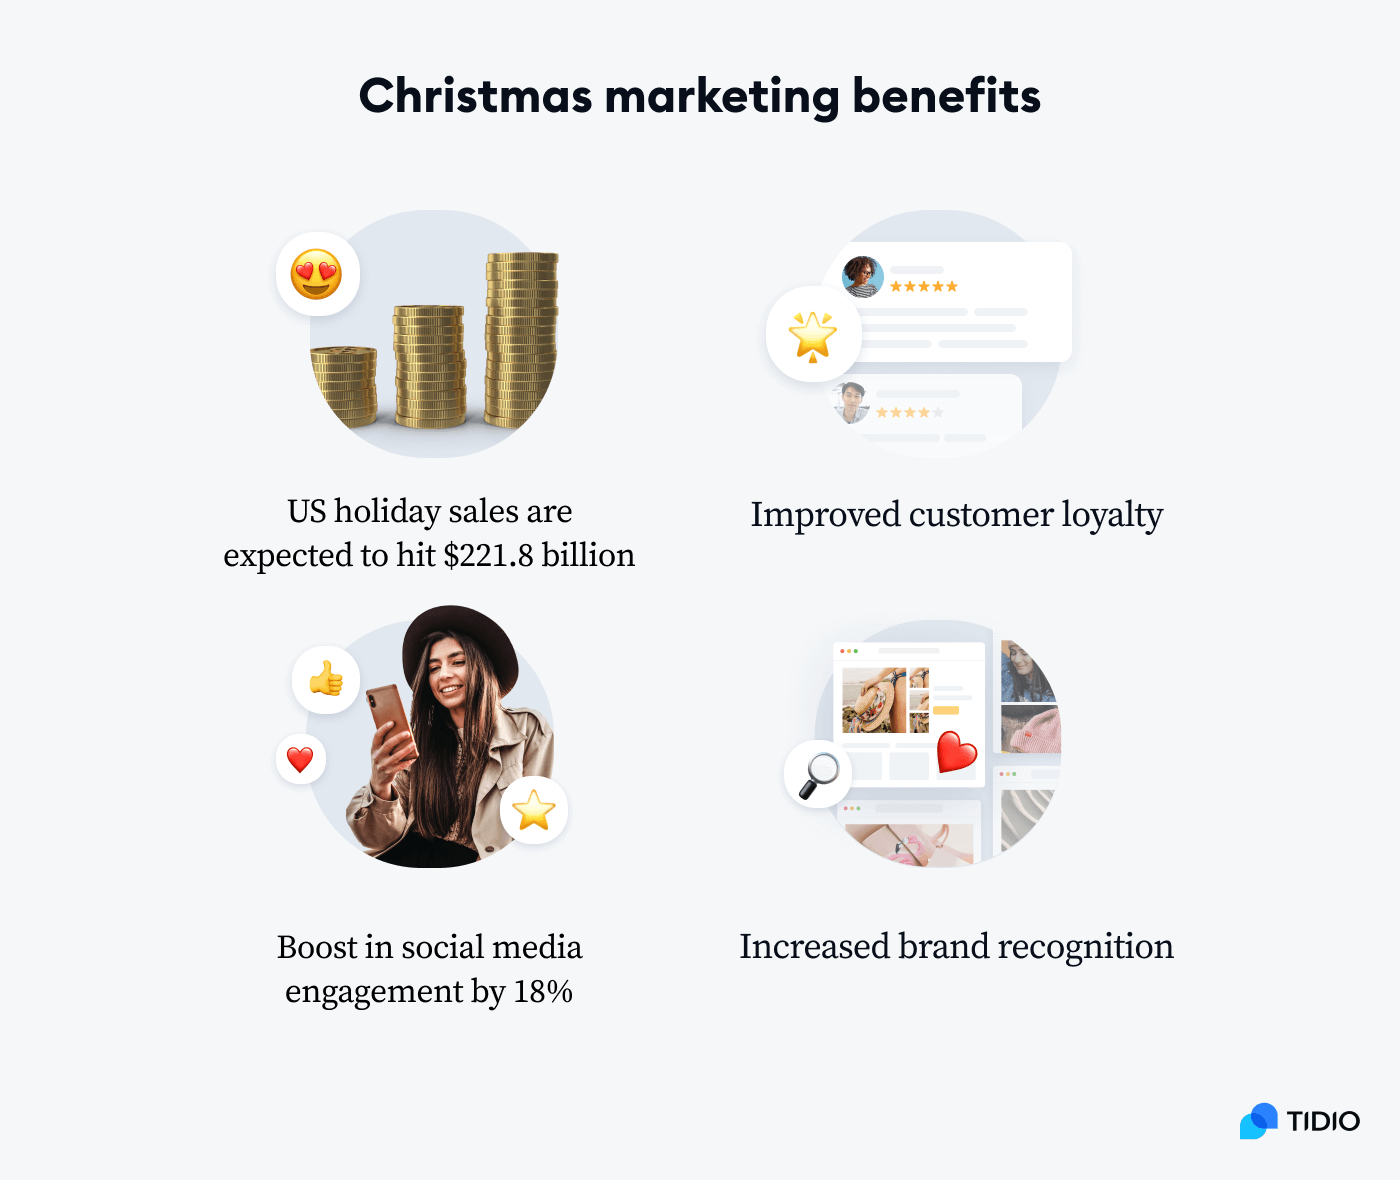 Christmas marketing benefits listed on image